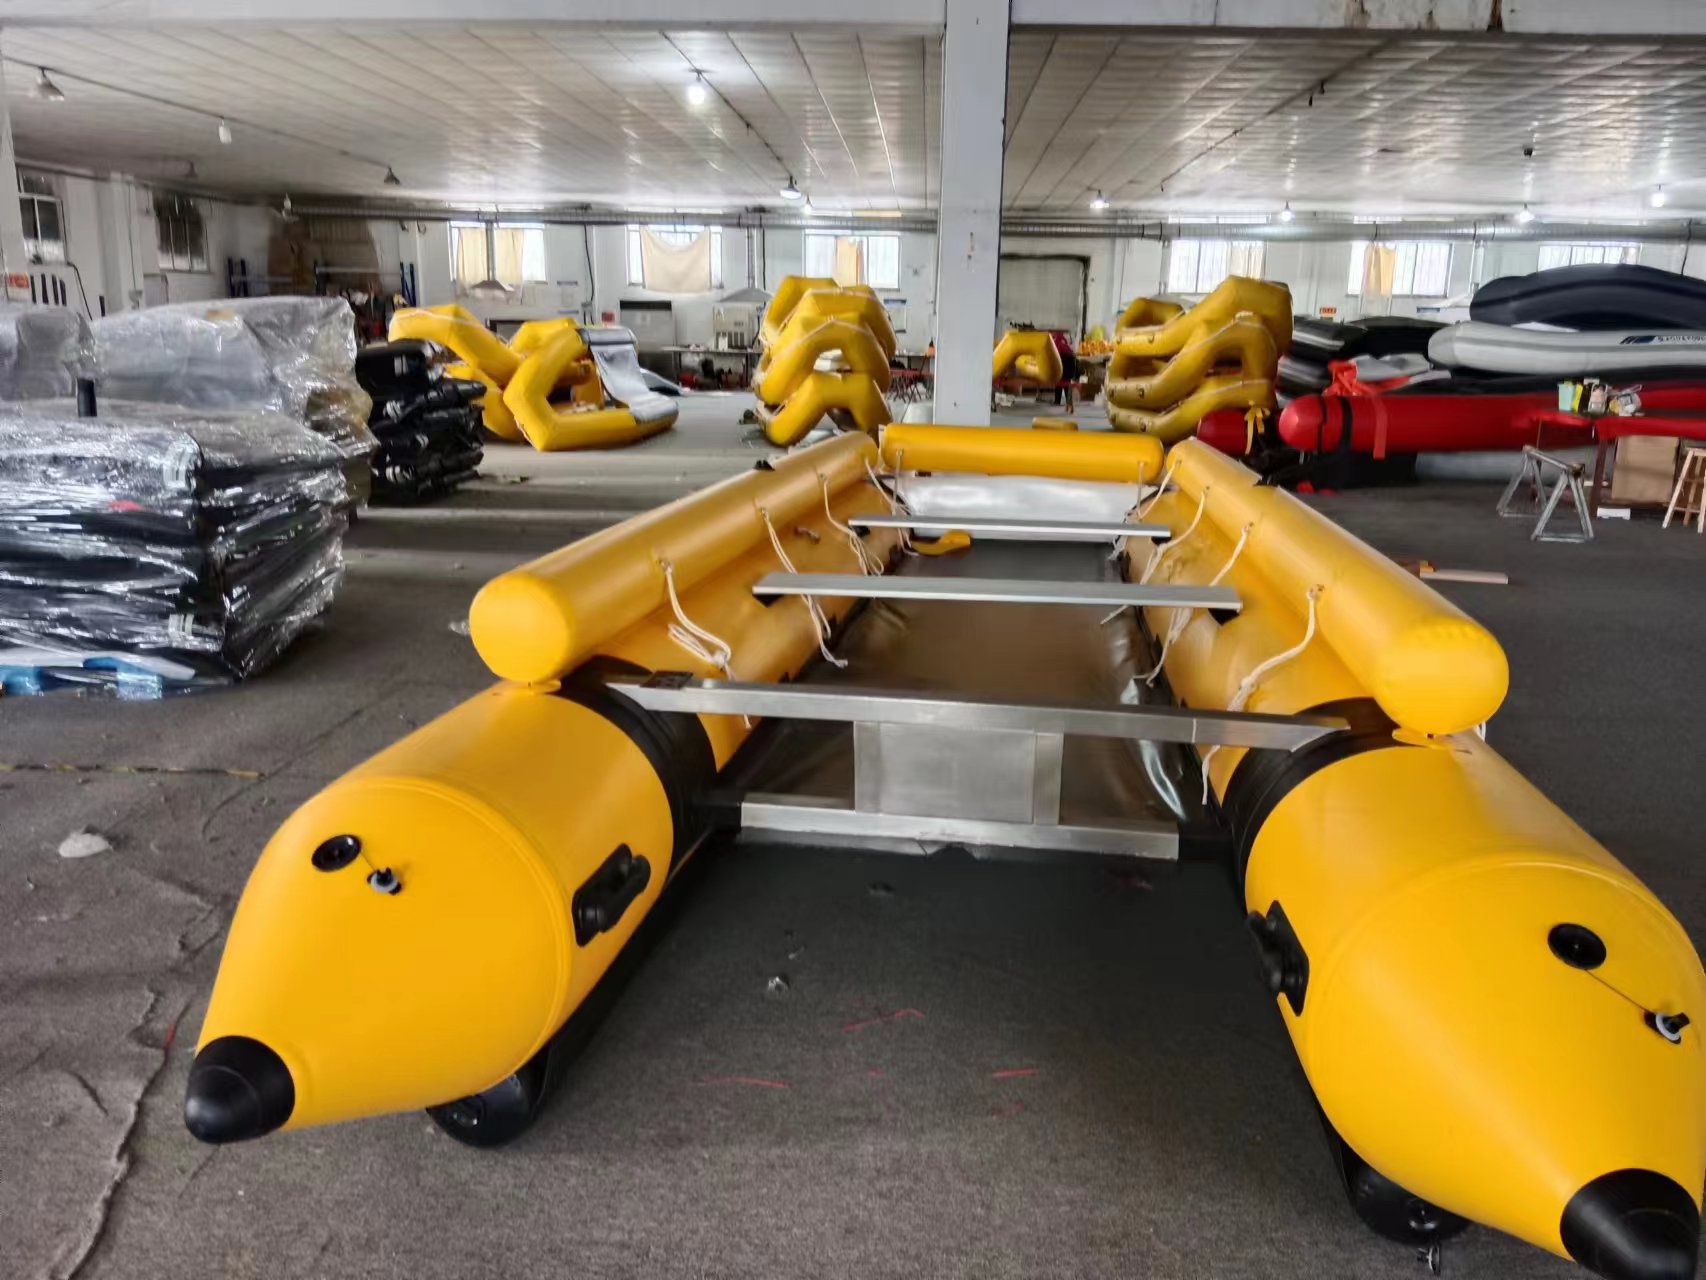  Bote inflable de velocidad de catamarán con piso de aluminio 